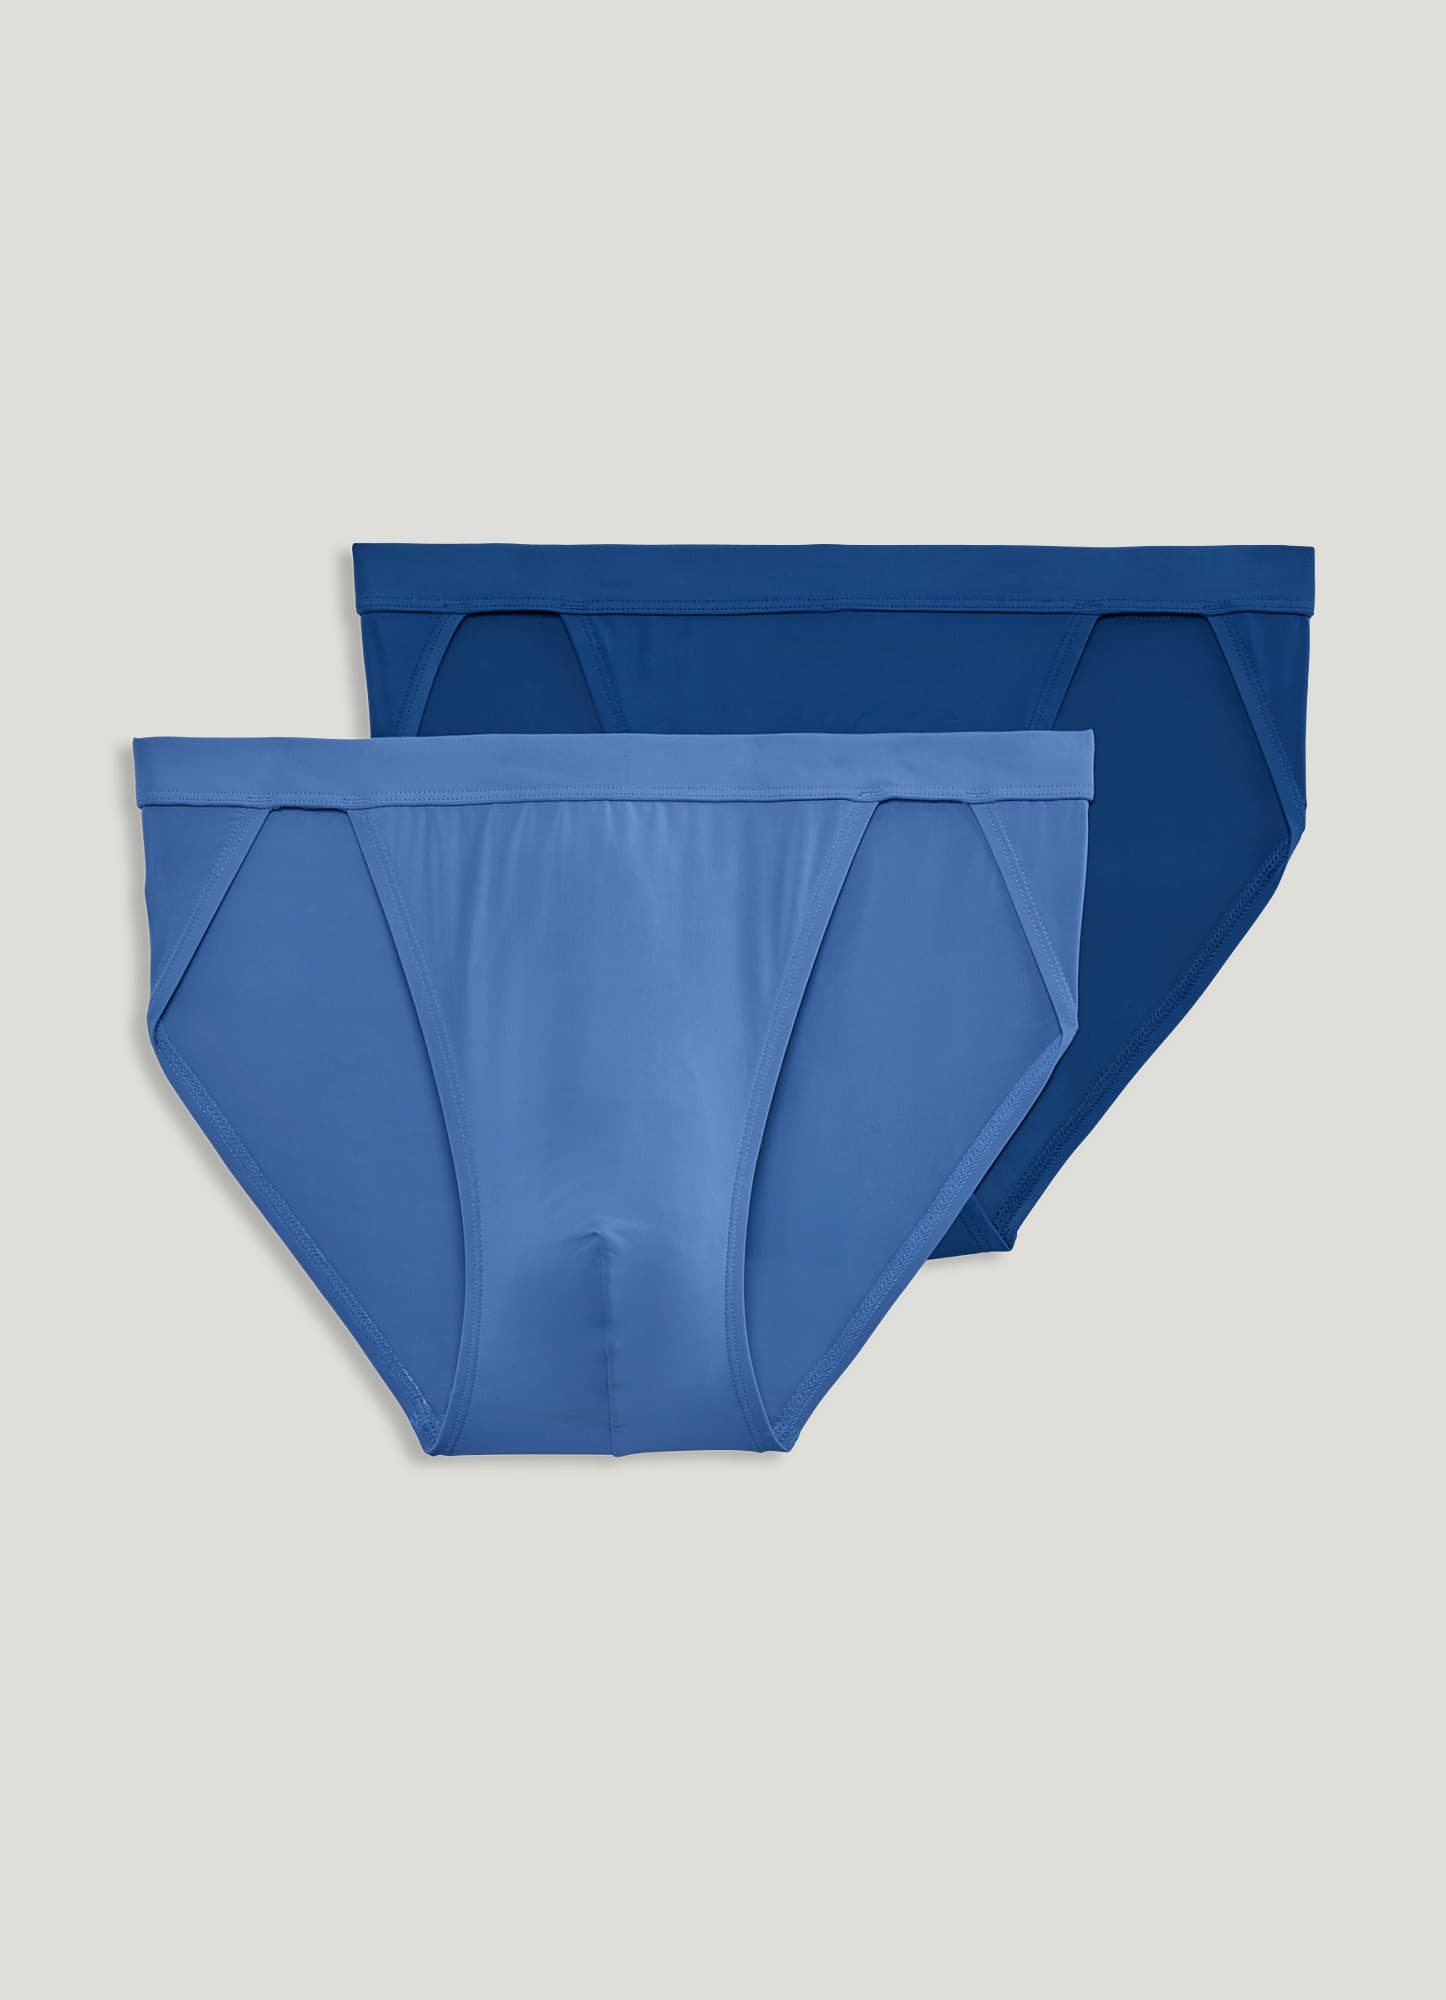 Buy Jockey Men's Underwear Elance String Bikini - 2 Pack online